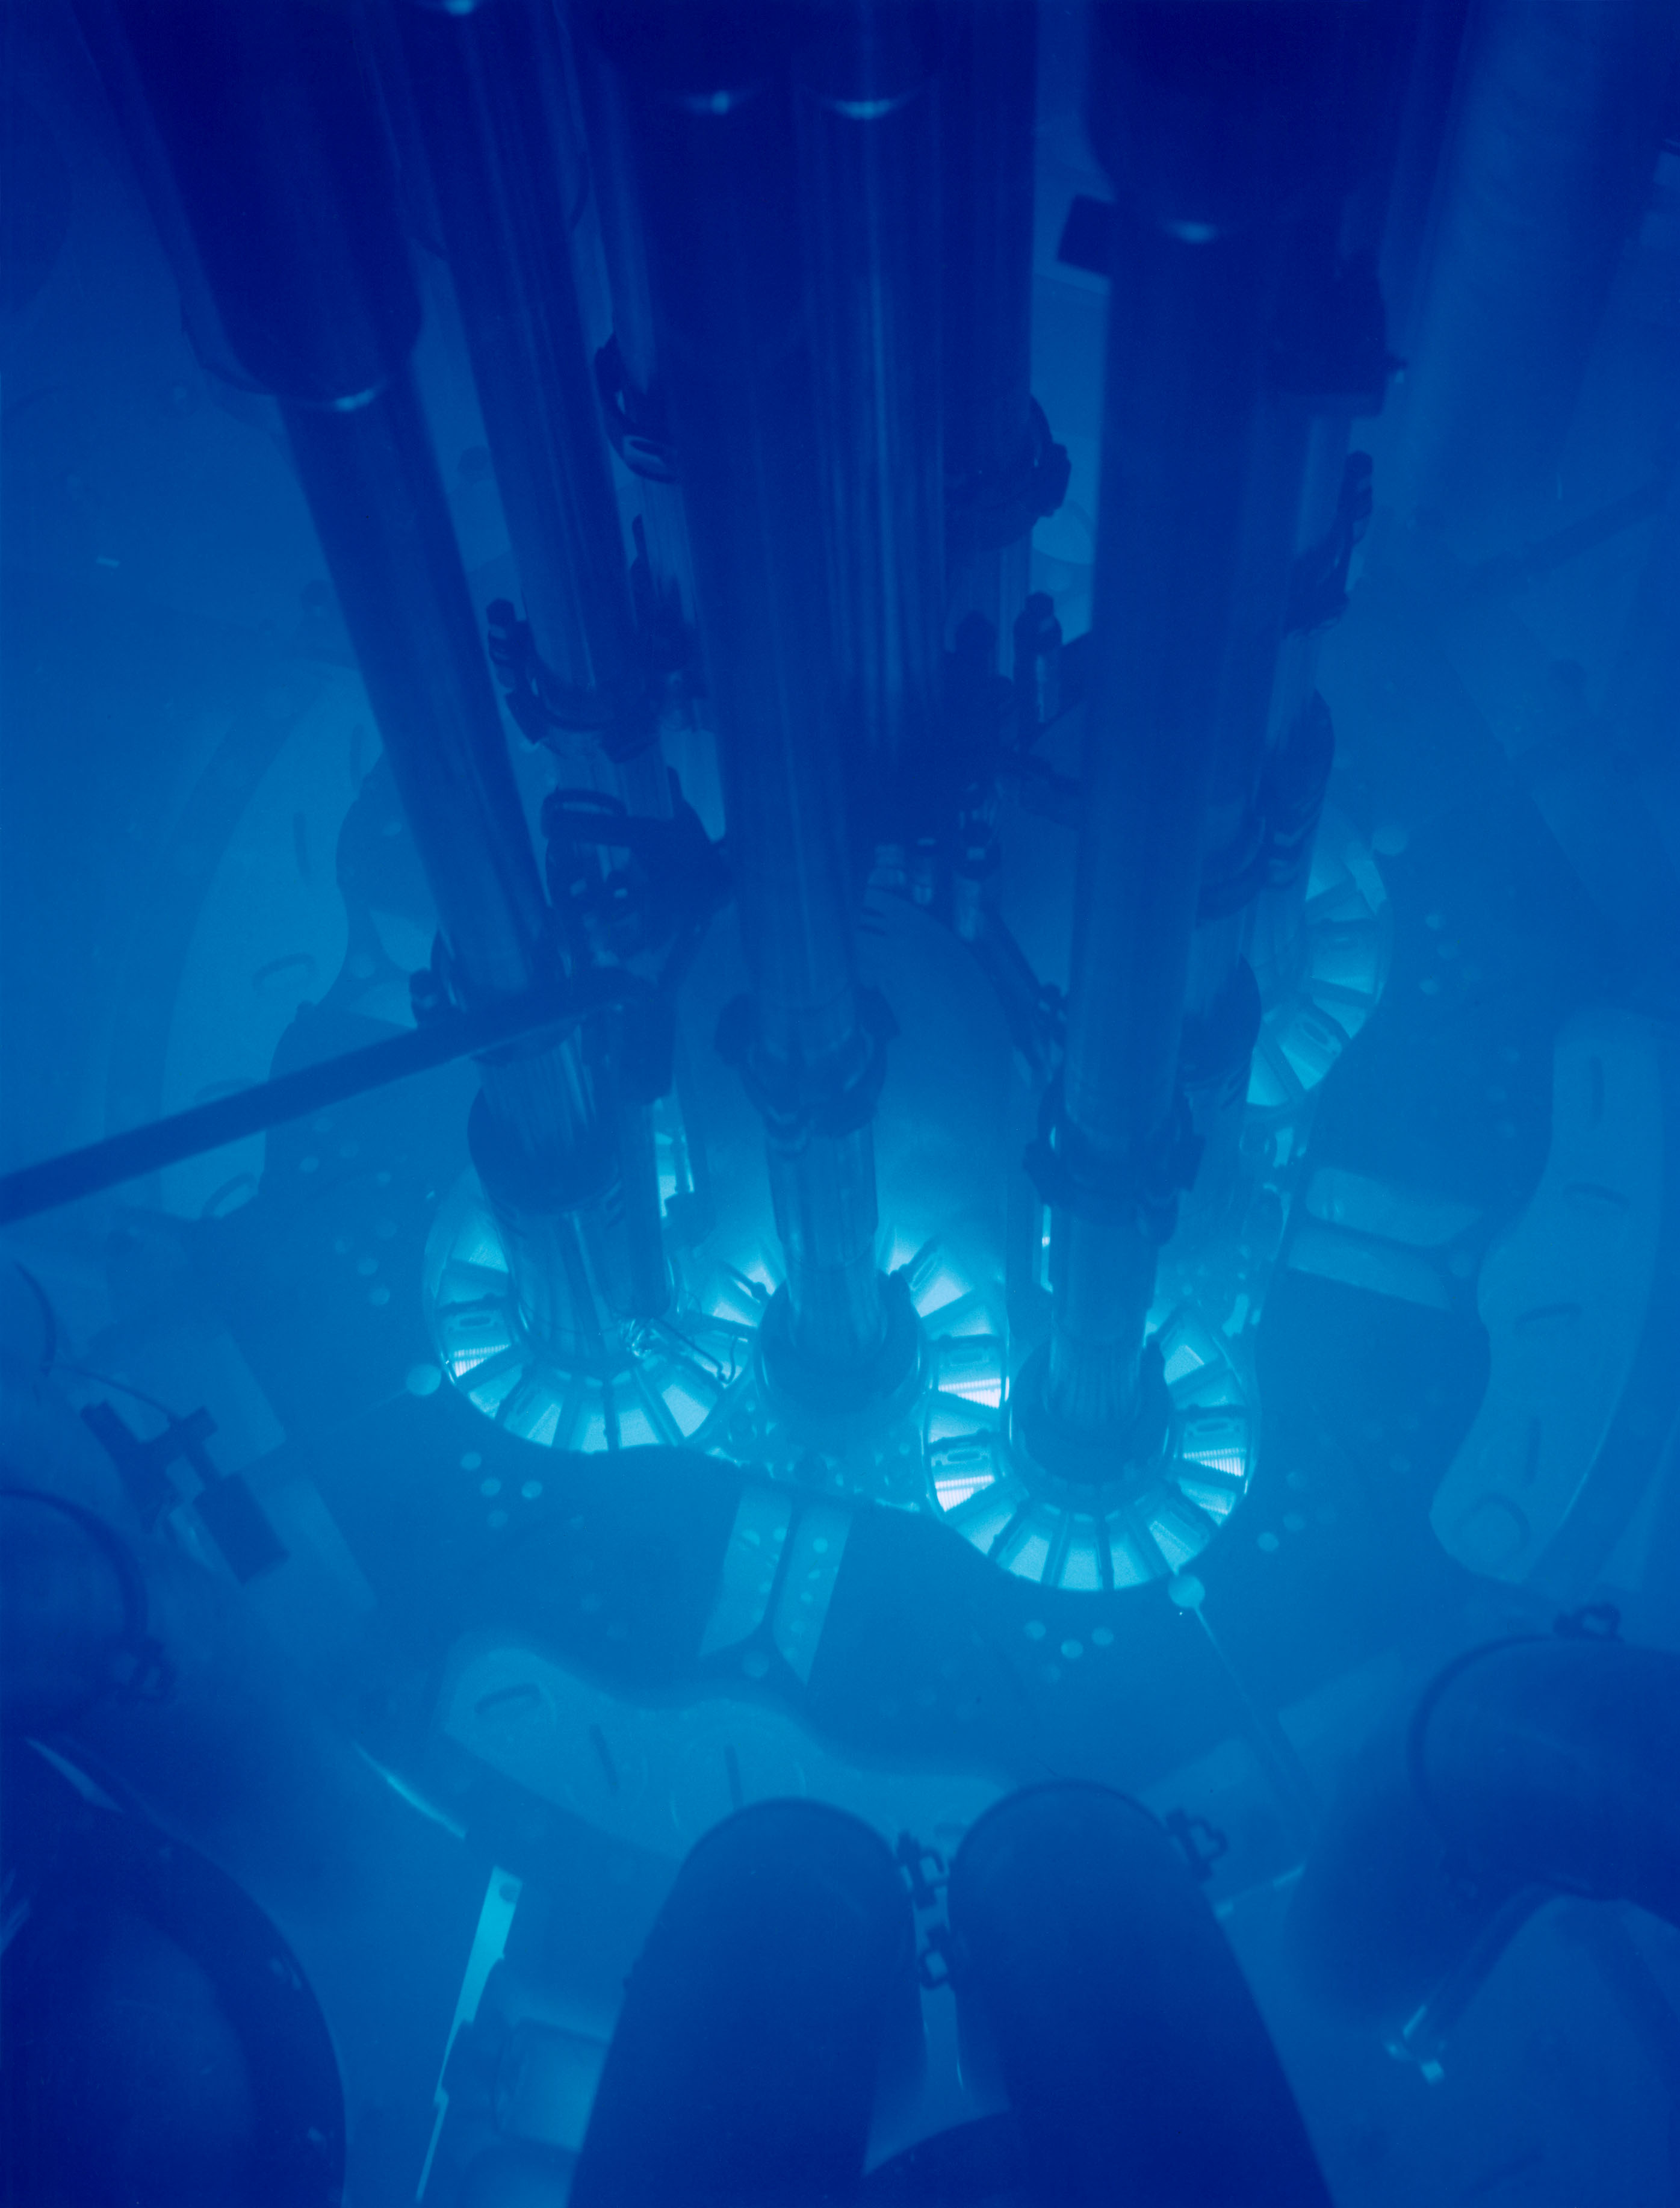 Neutrino Telescopes Based On Water